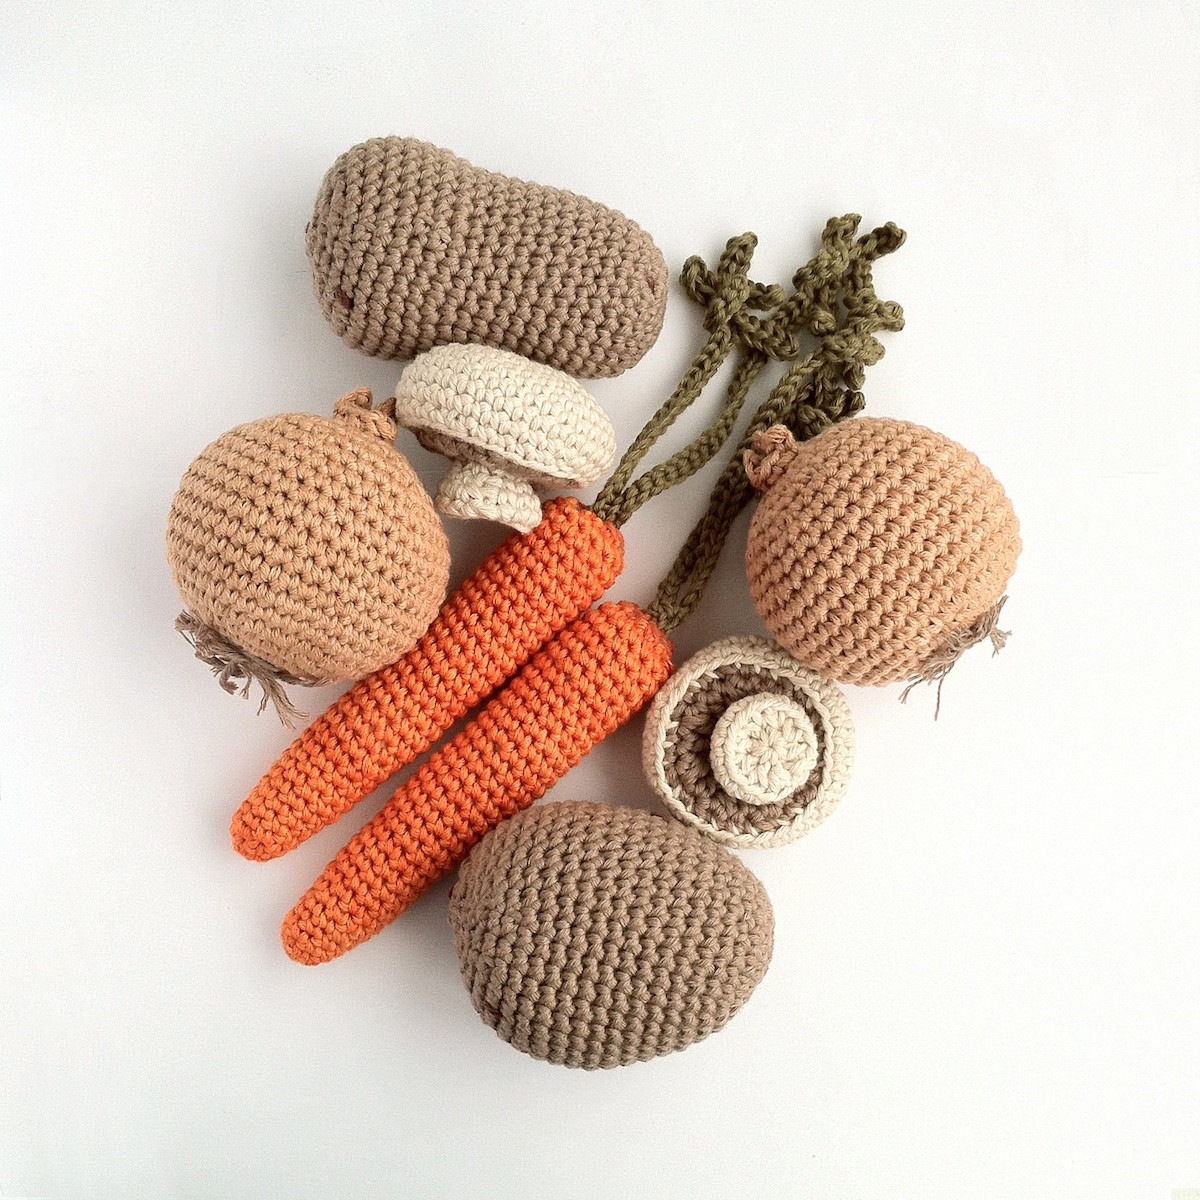 Crochet Vegetable Patterns - Little Conkers